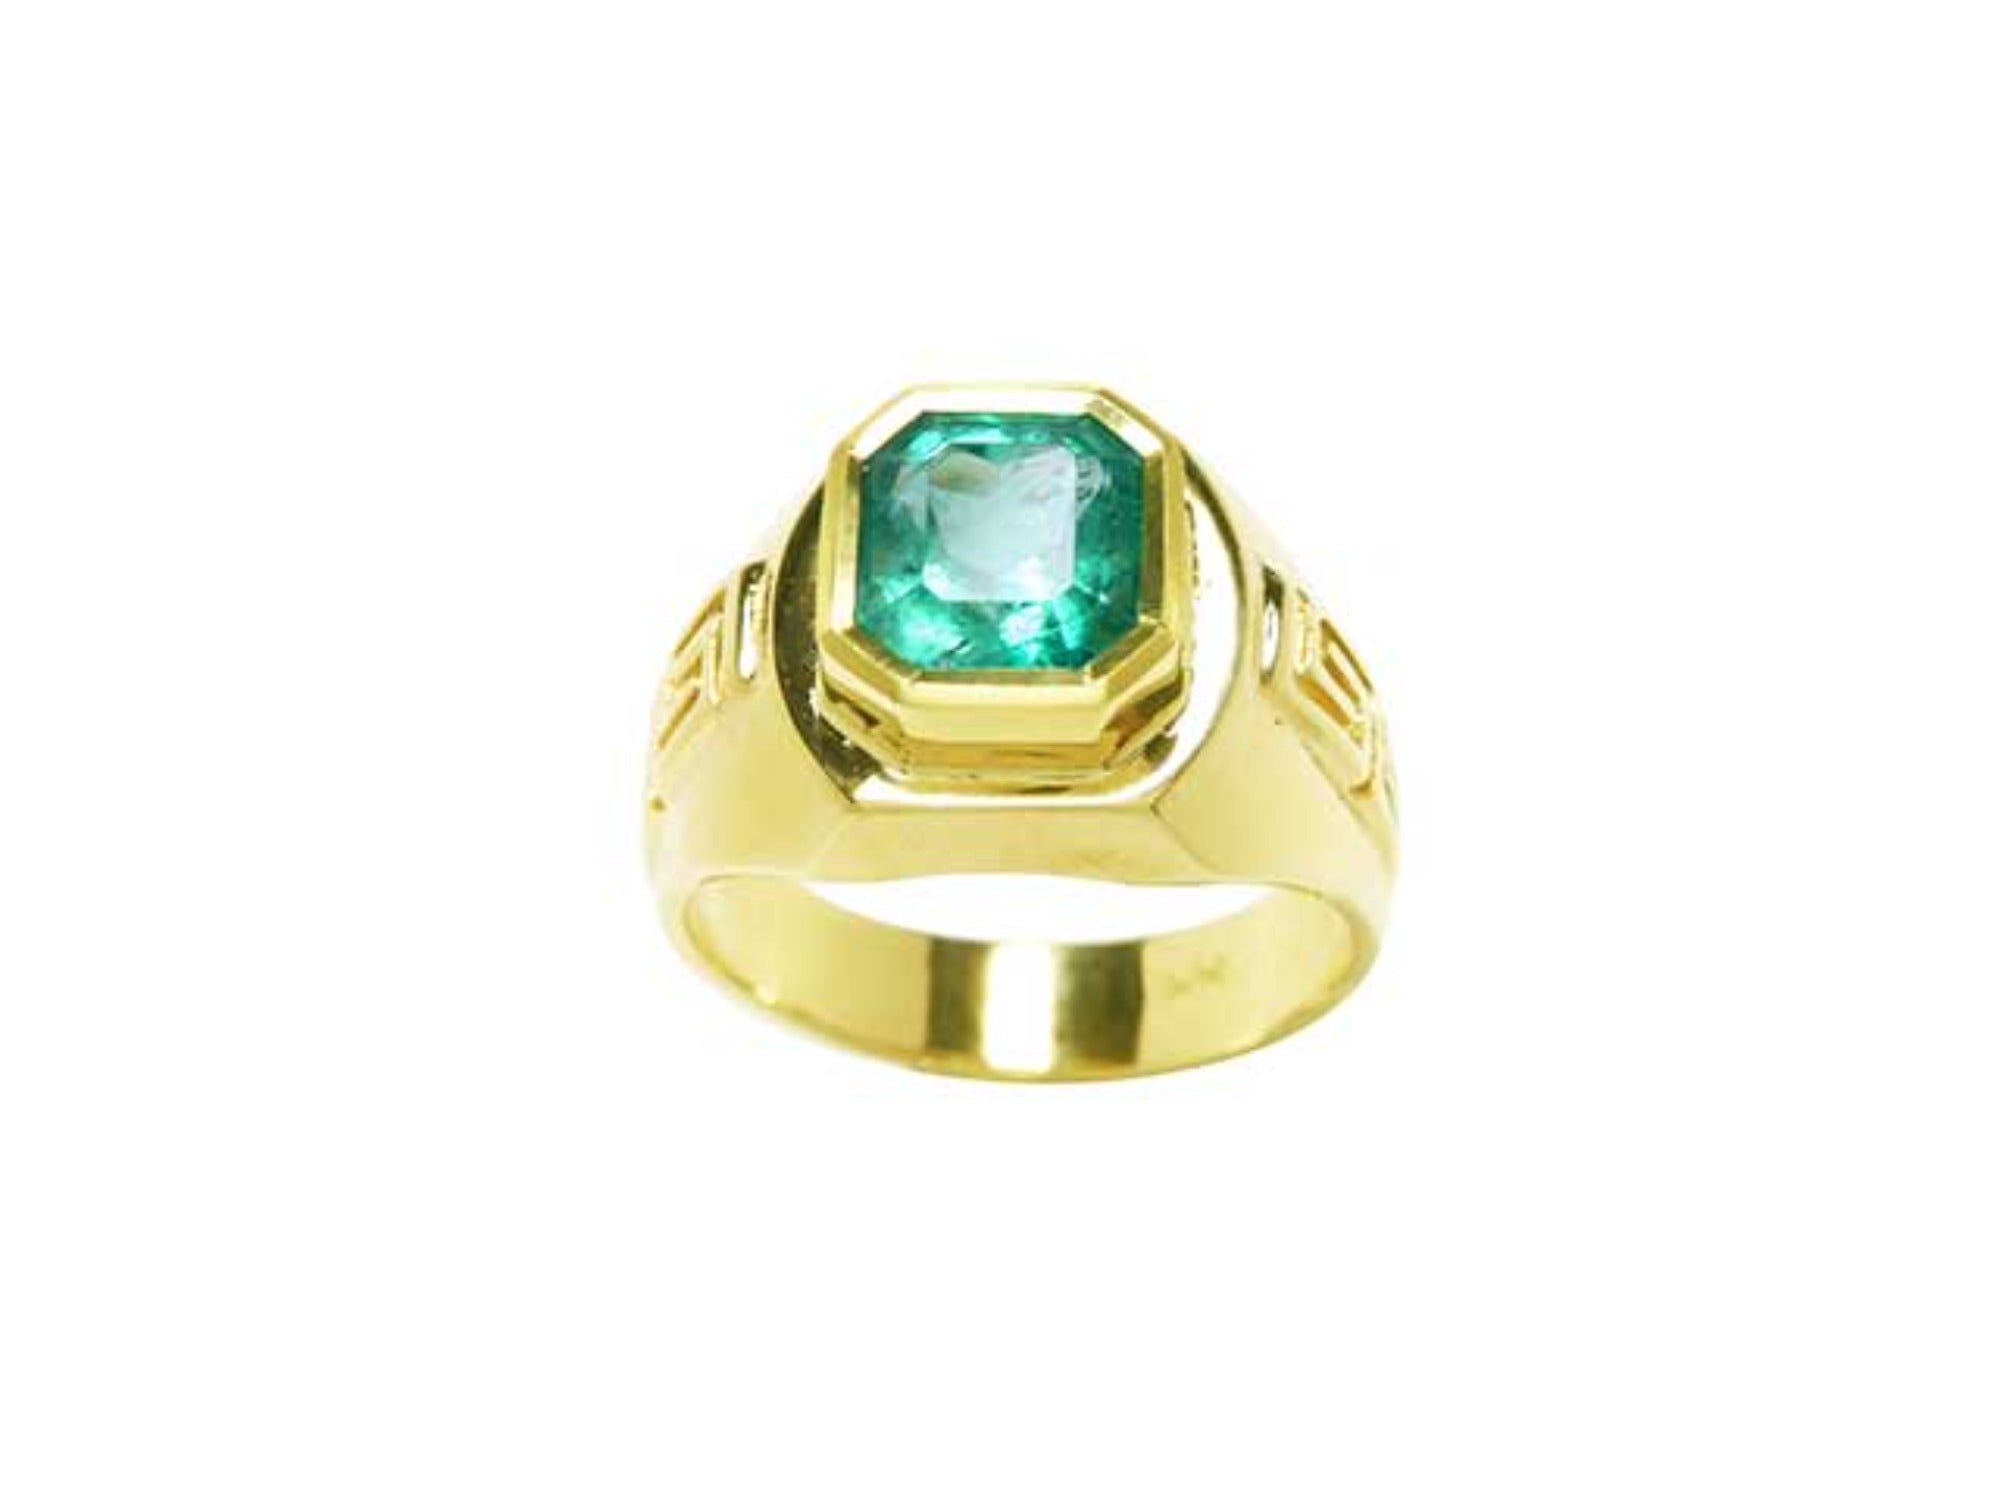 Emerald men’s ring